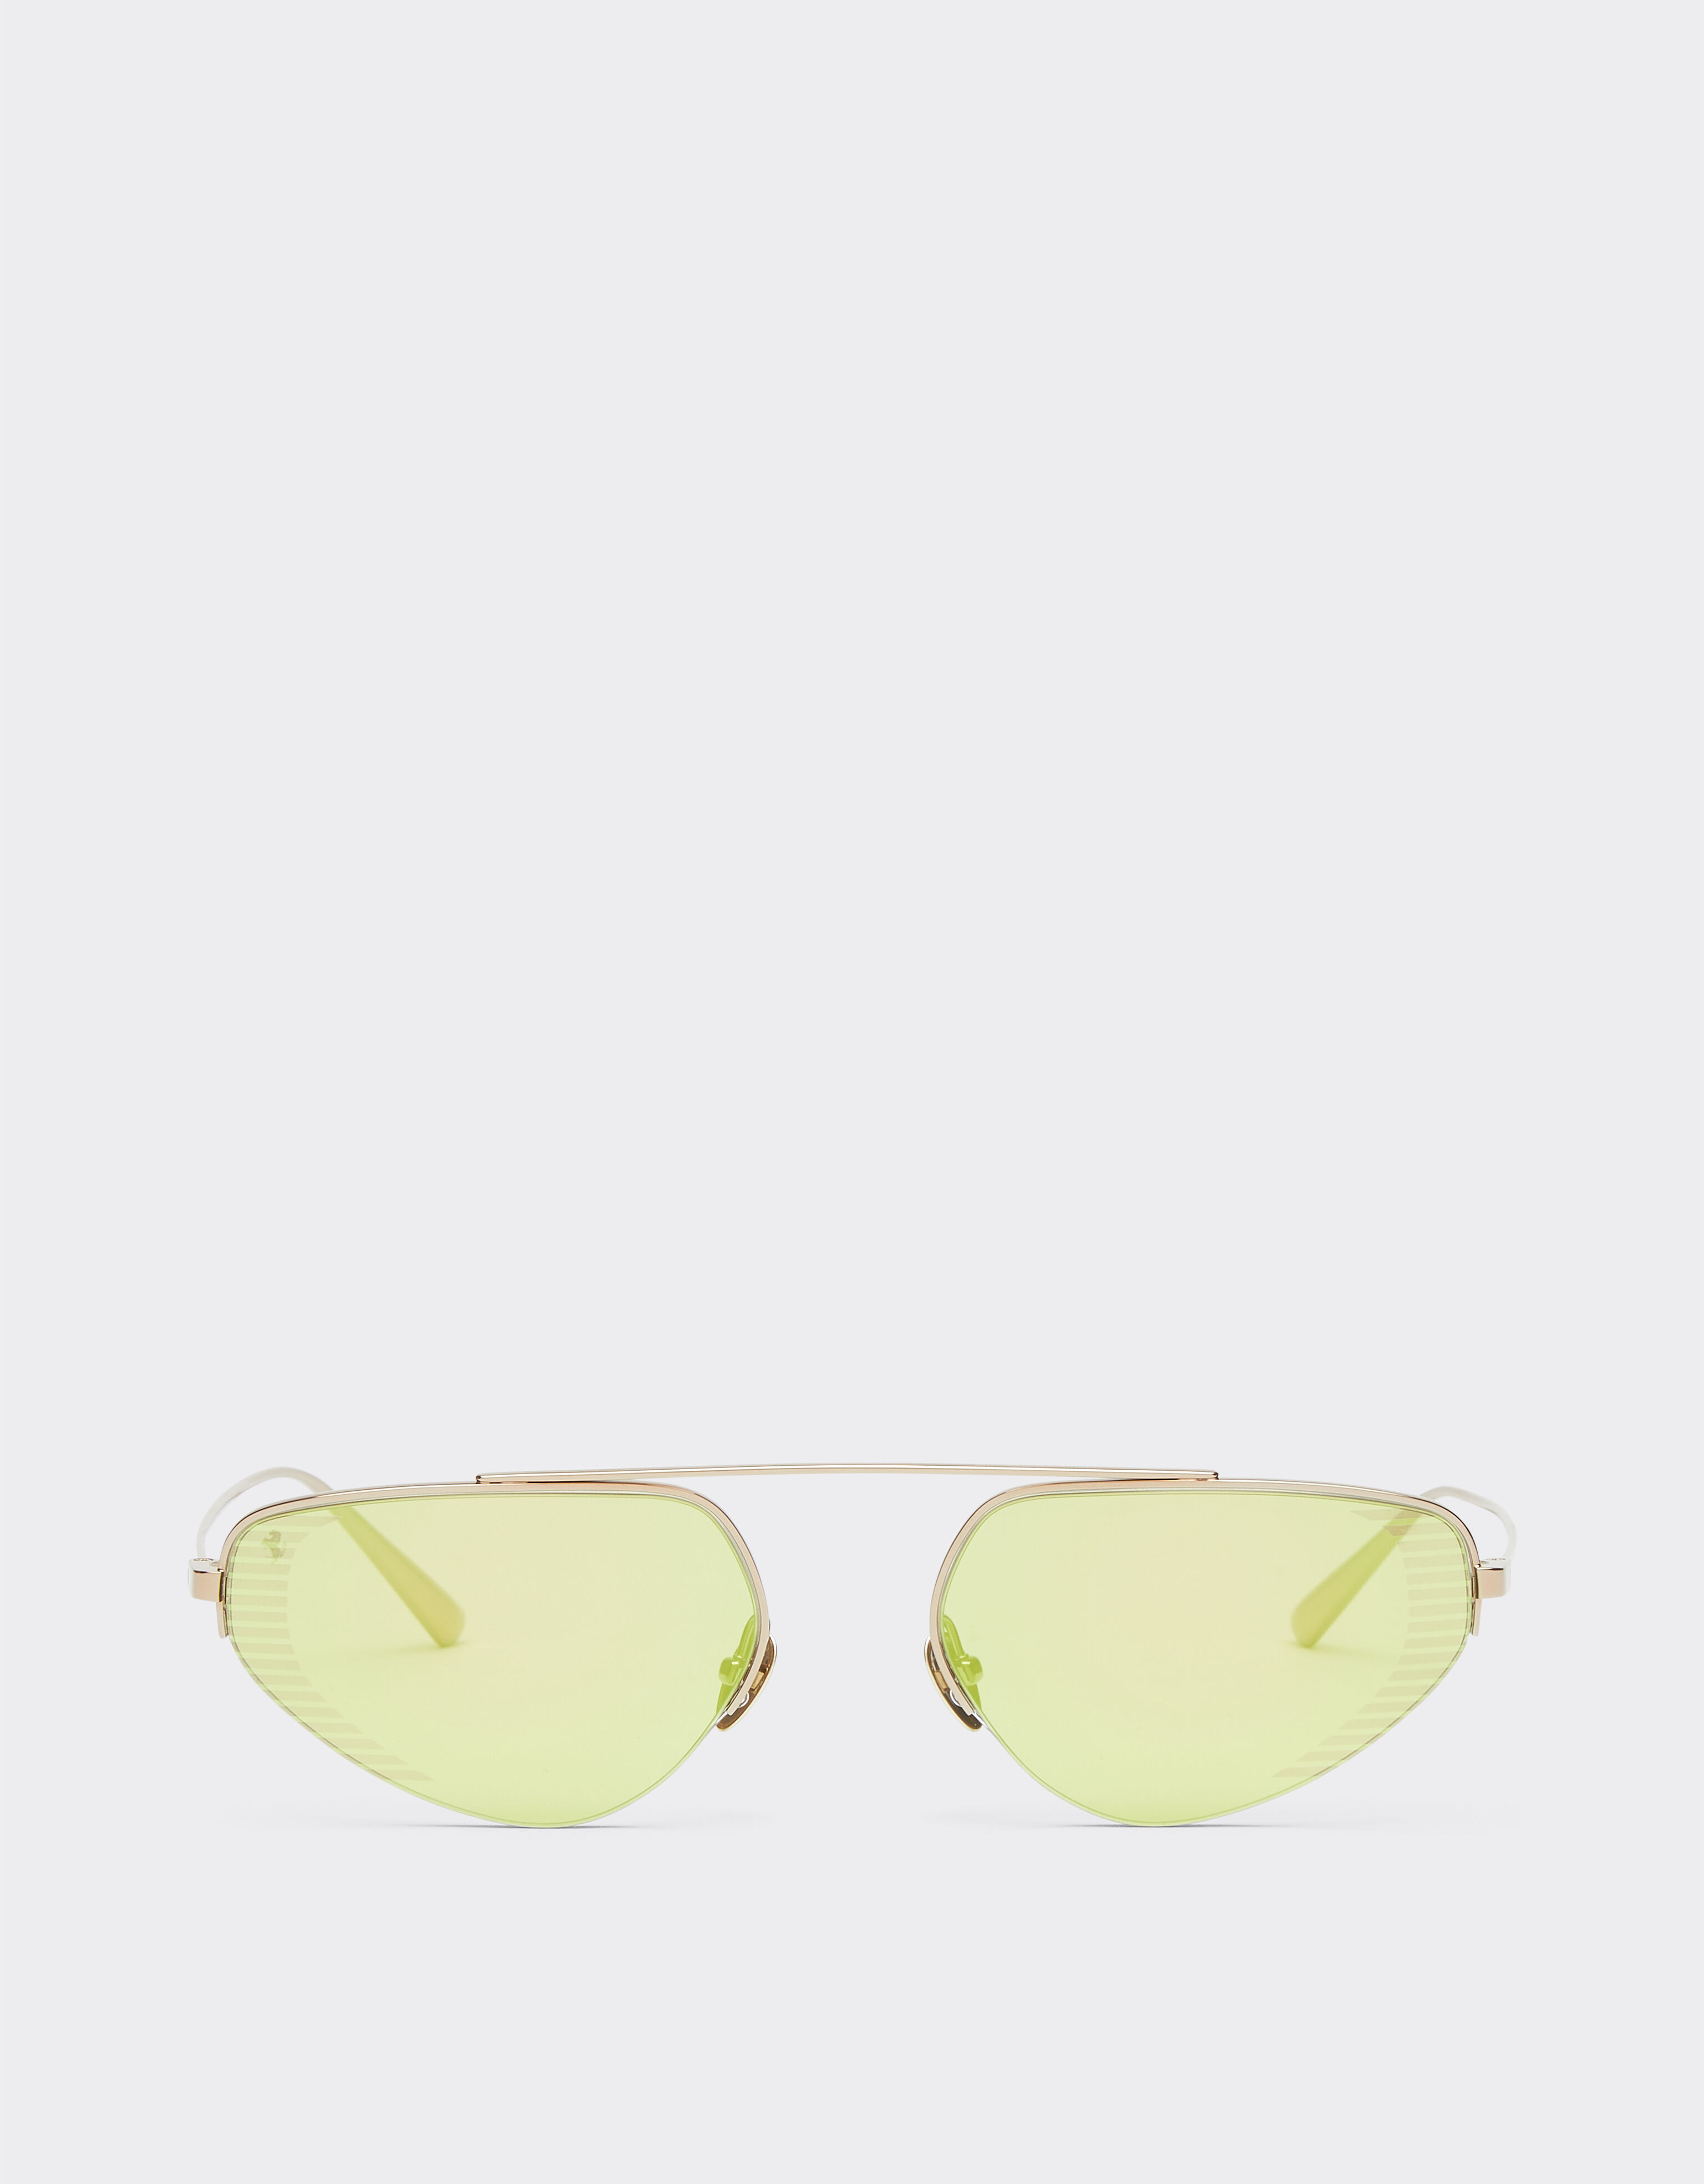 Ferrari Ferrari sunglasses in gold-tone titanium with green mirror lenses Gold F1276f